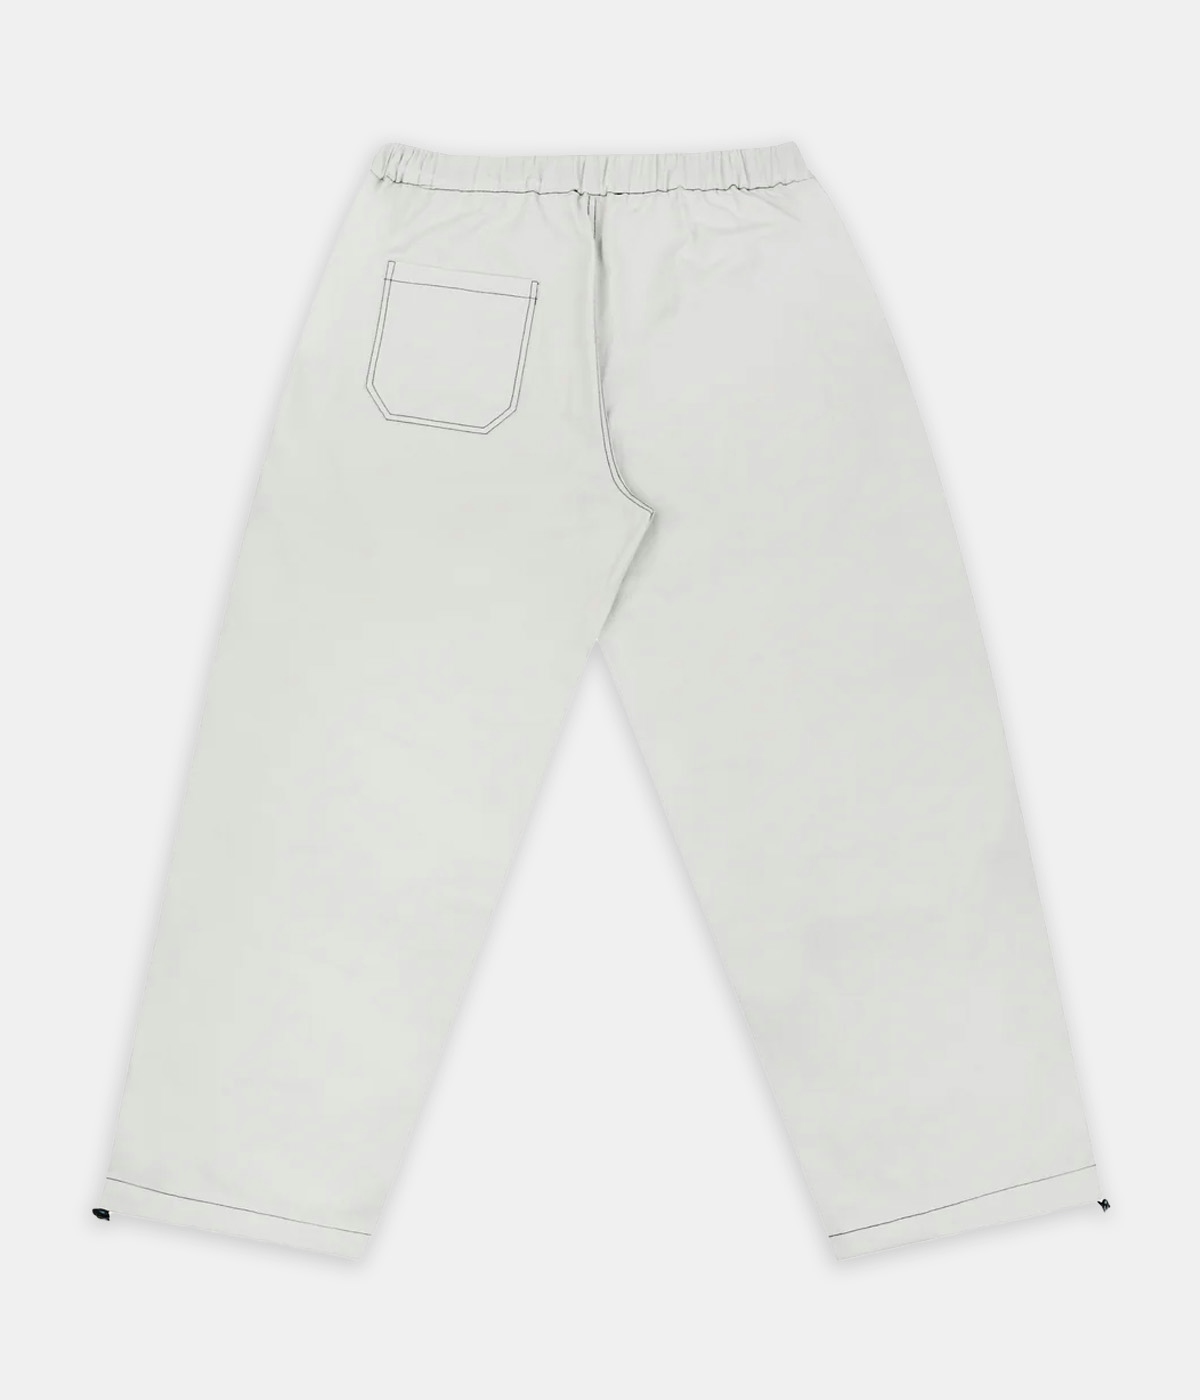 Yardsale Outdoor Pants Silver 2